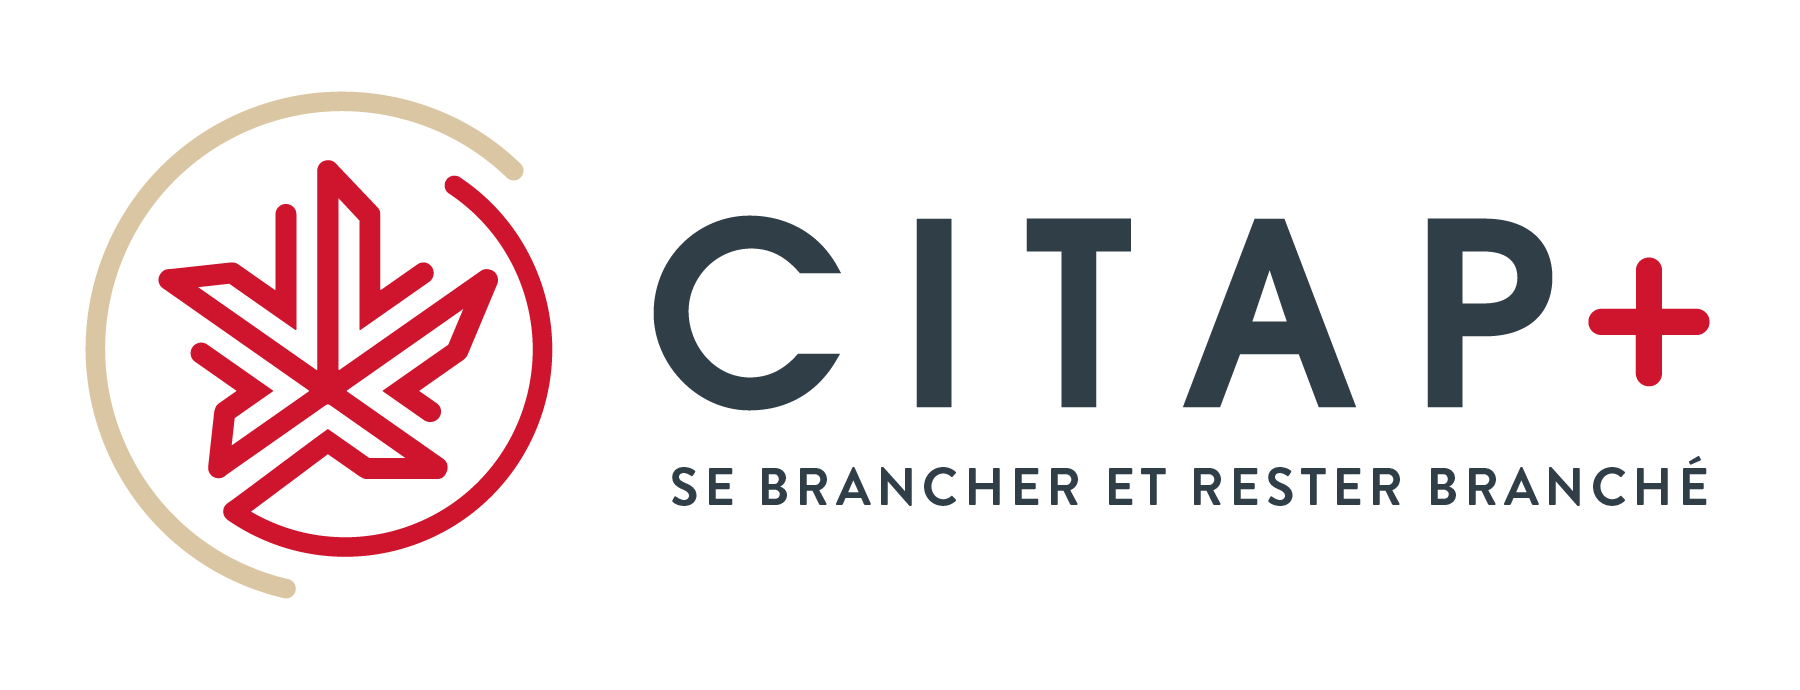 CITAP-logo-fr-horizontal